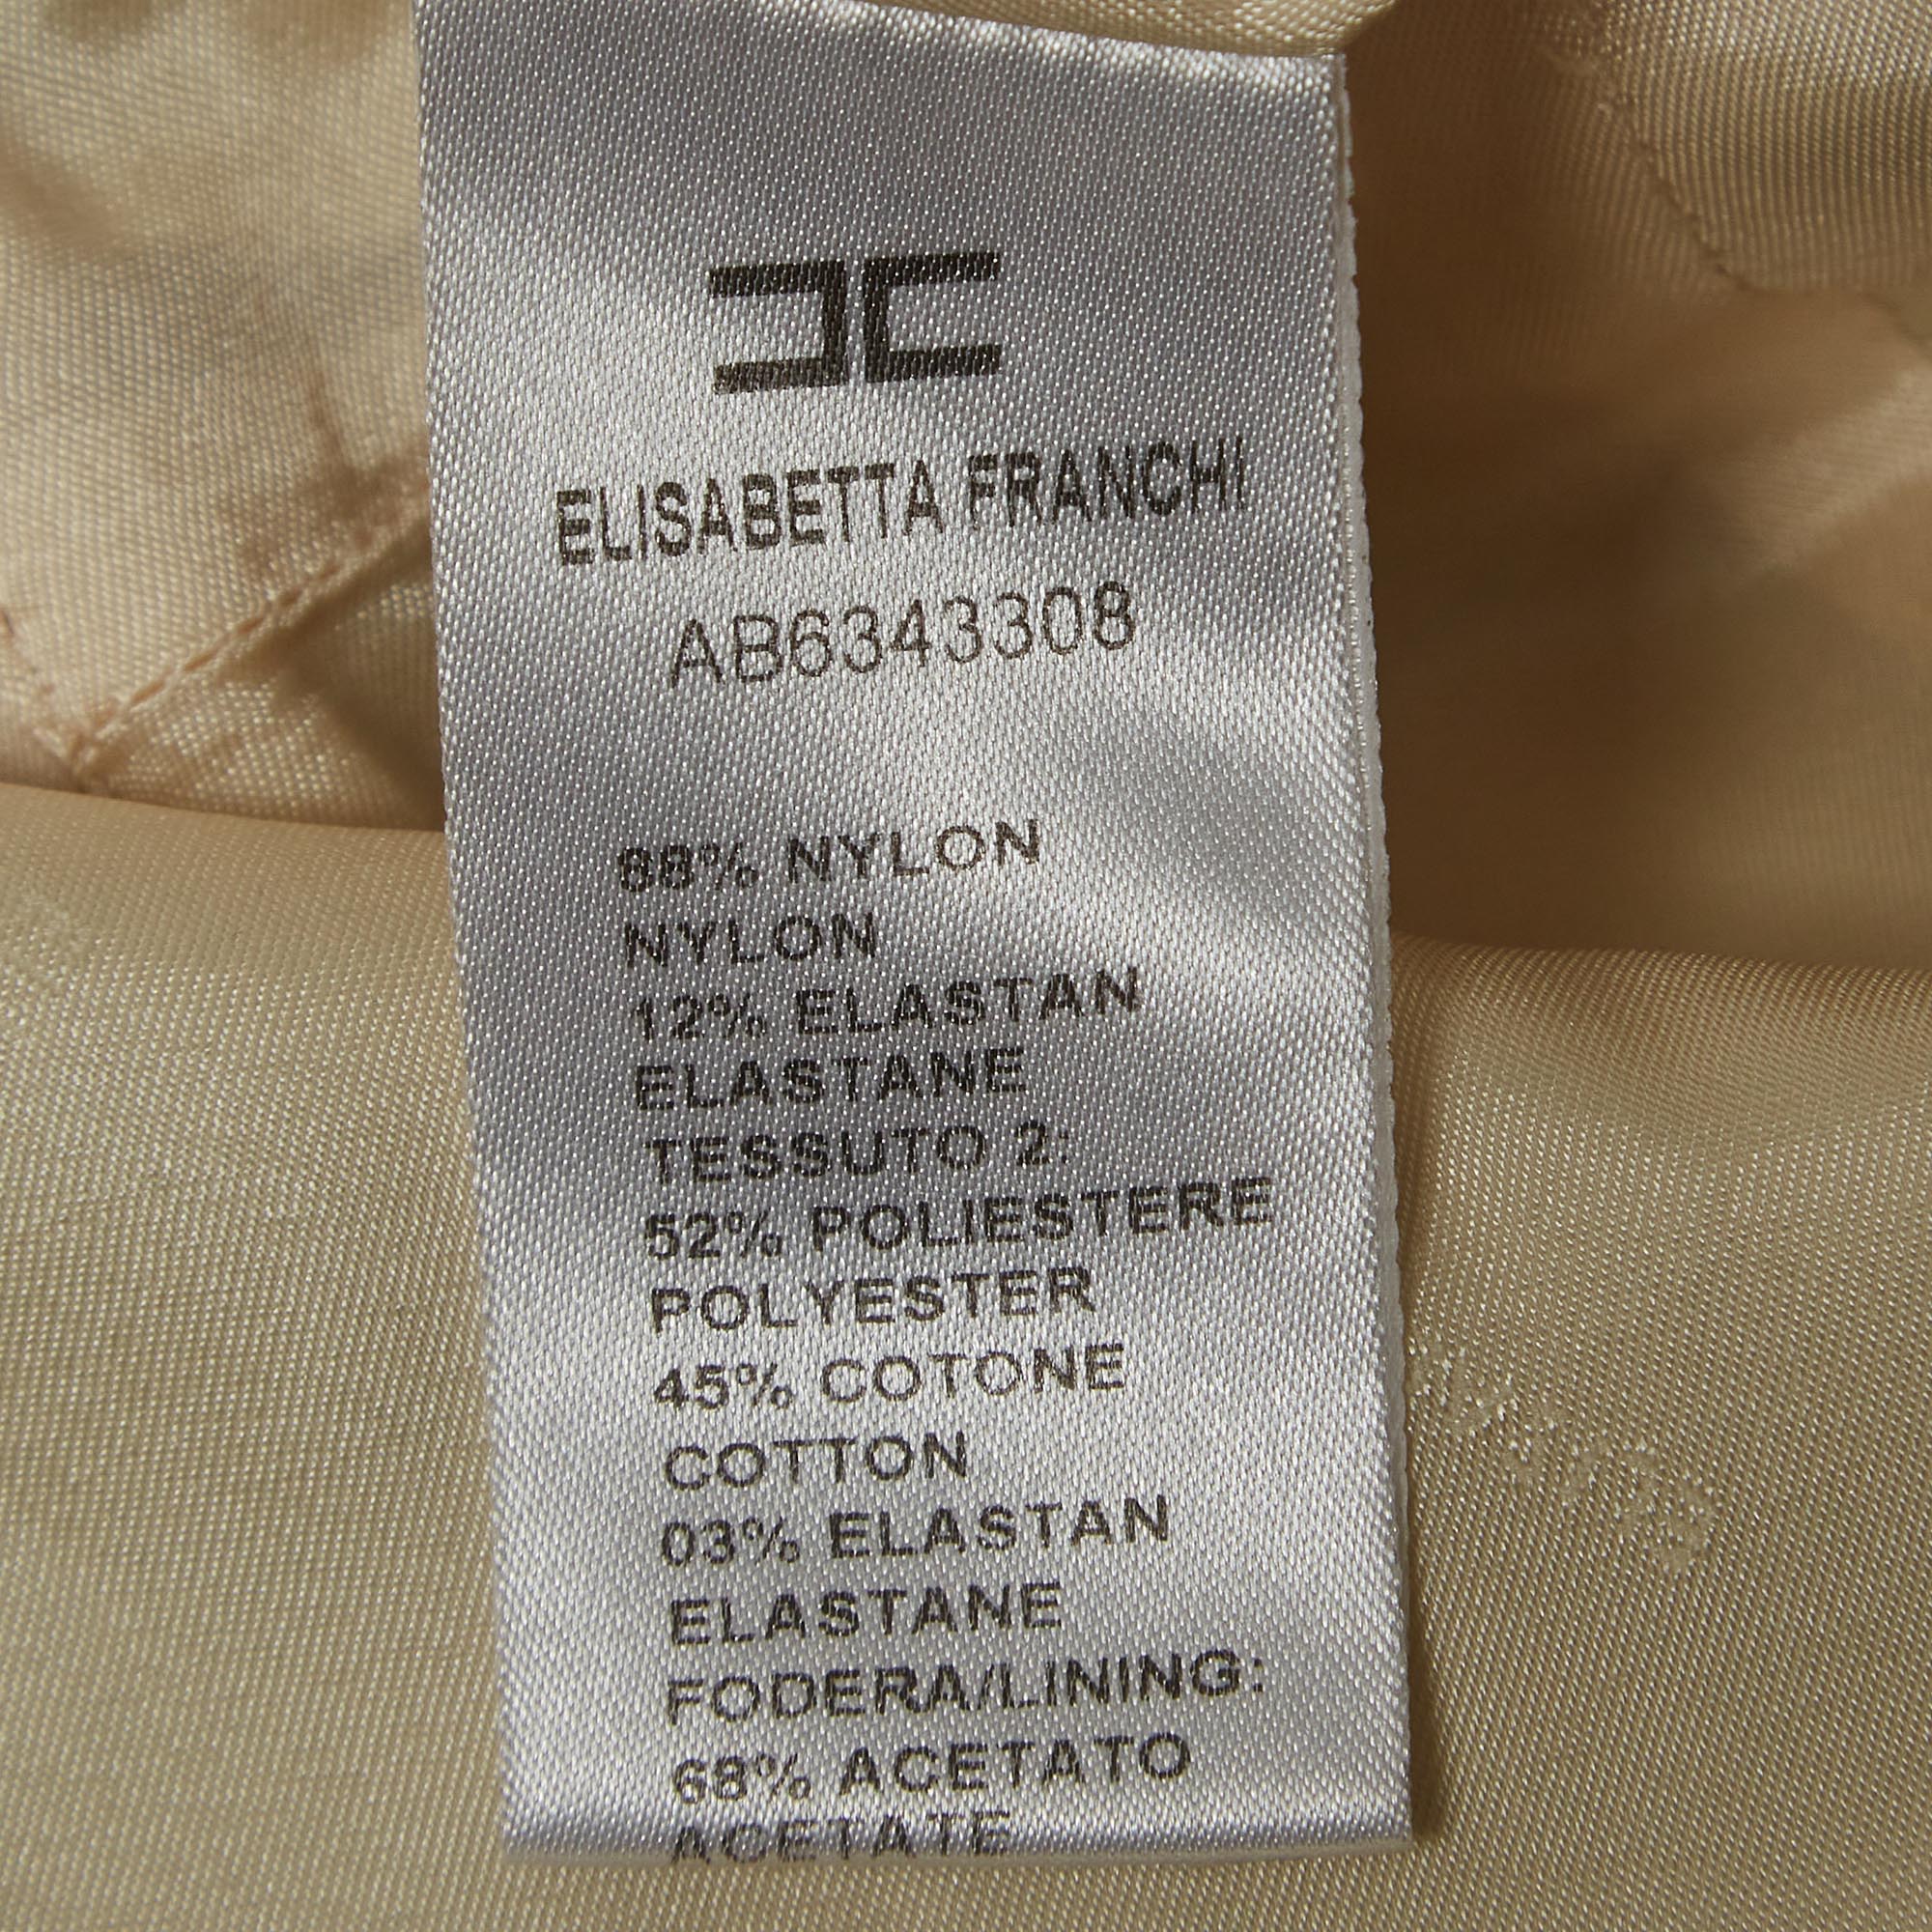 Elisabetta Franchi Cream Crepe Button Detail Belted Mini Dress S